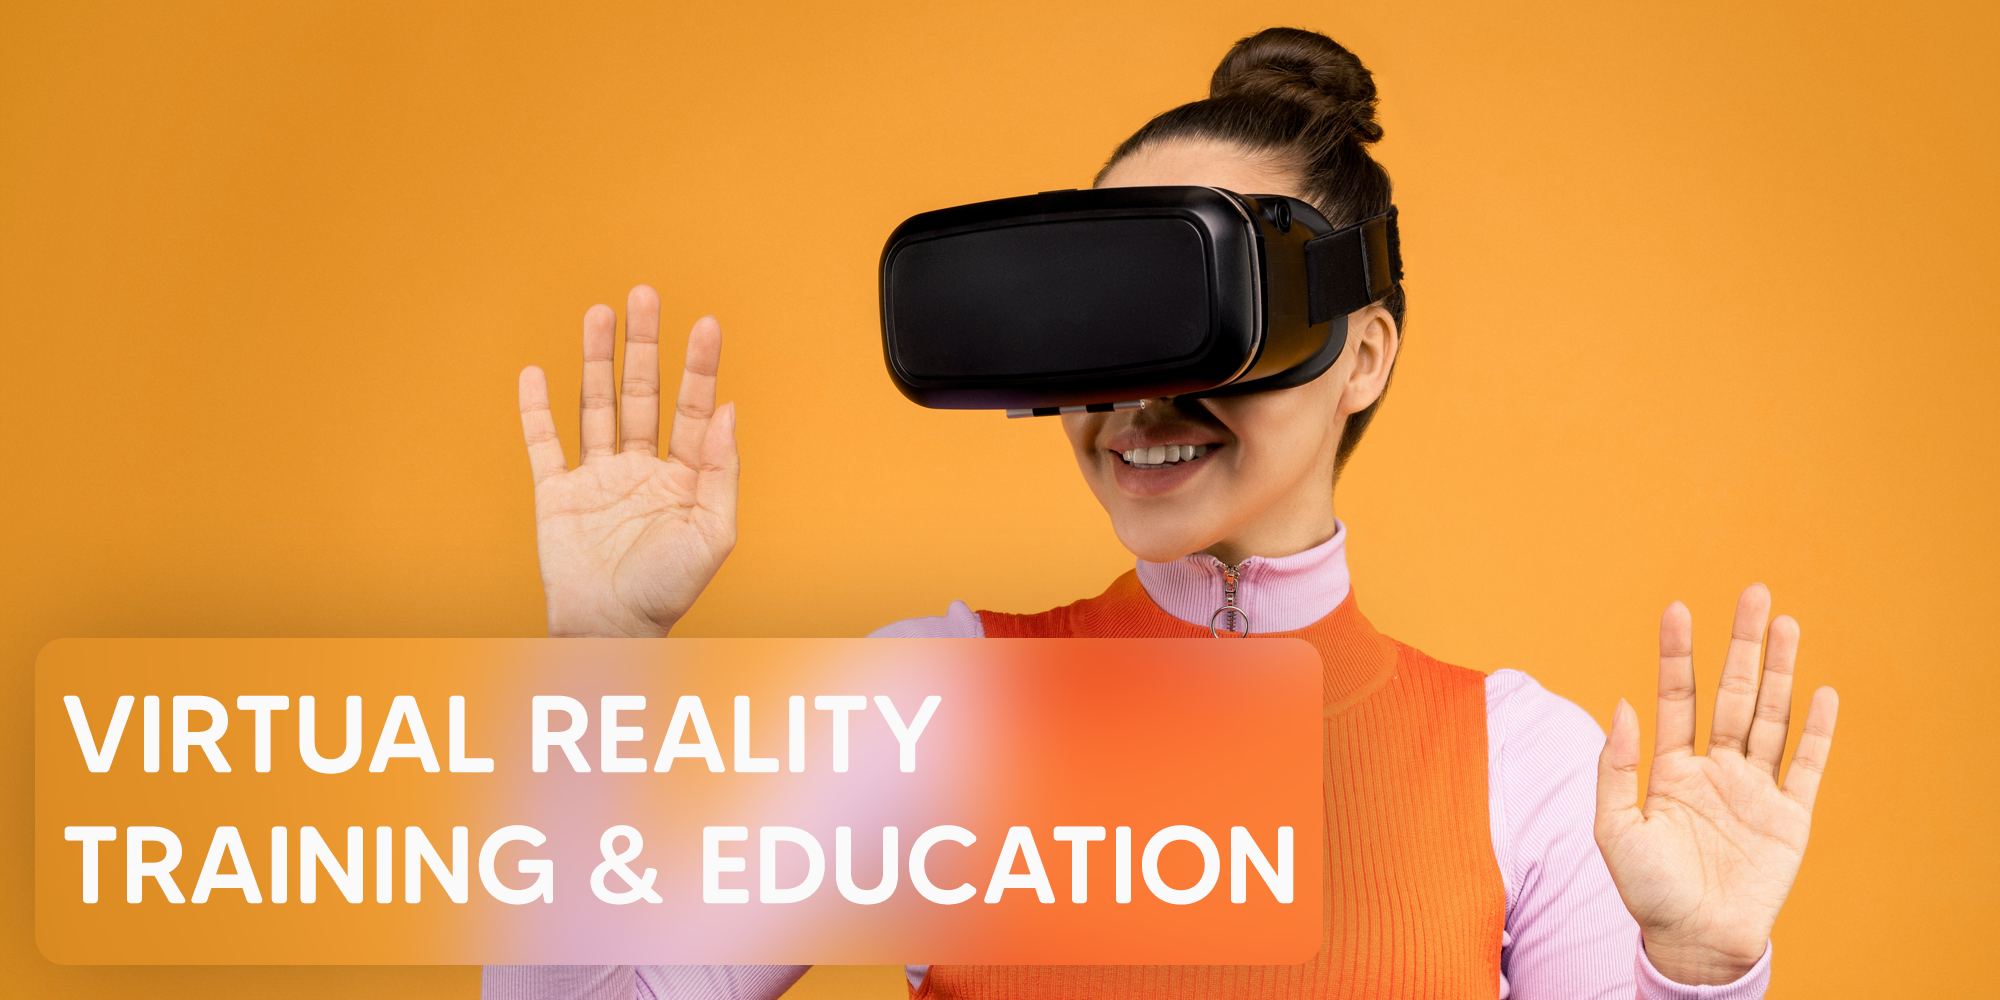 VR for Training & Education